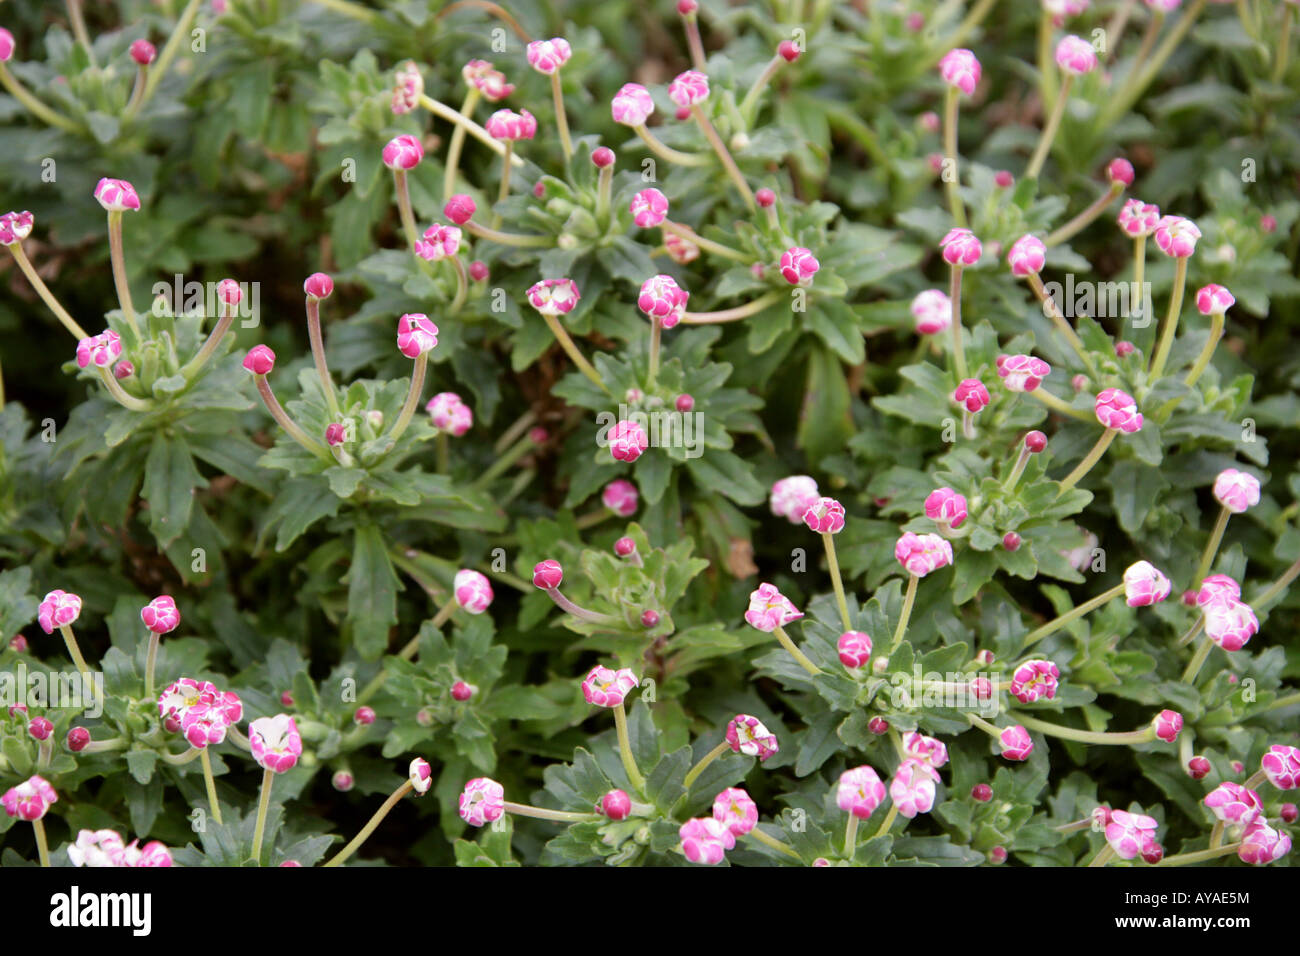 Zaluzianskya Ovata Flower Stockfotos und -bilder Kaufen - Alamy